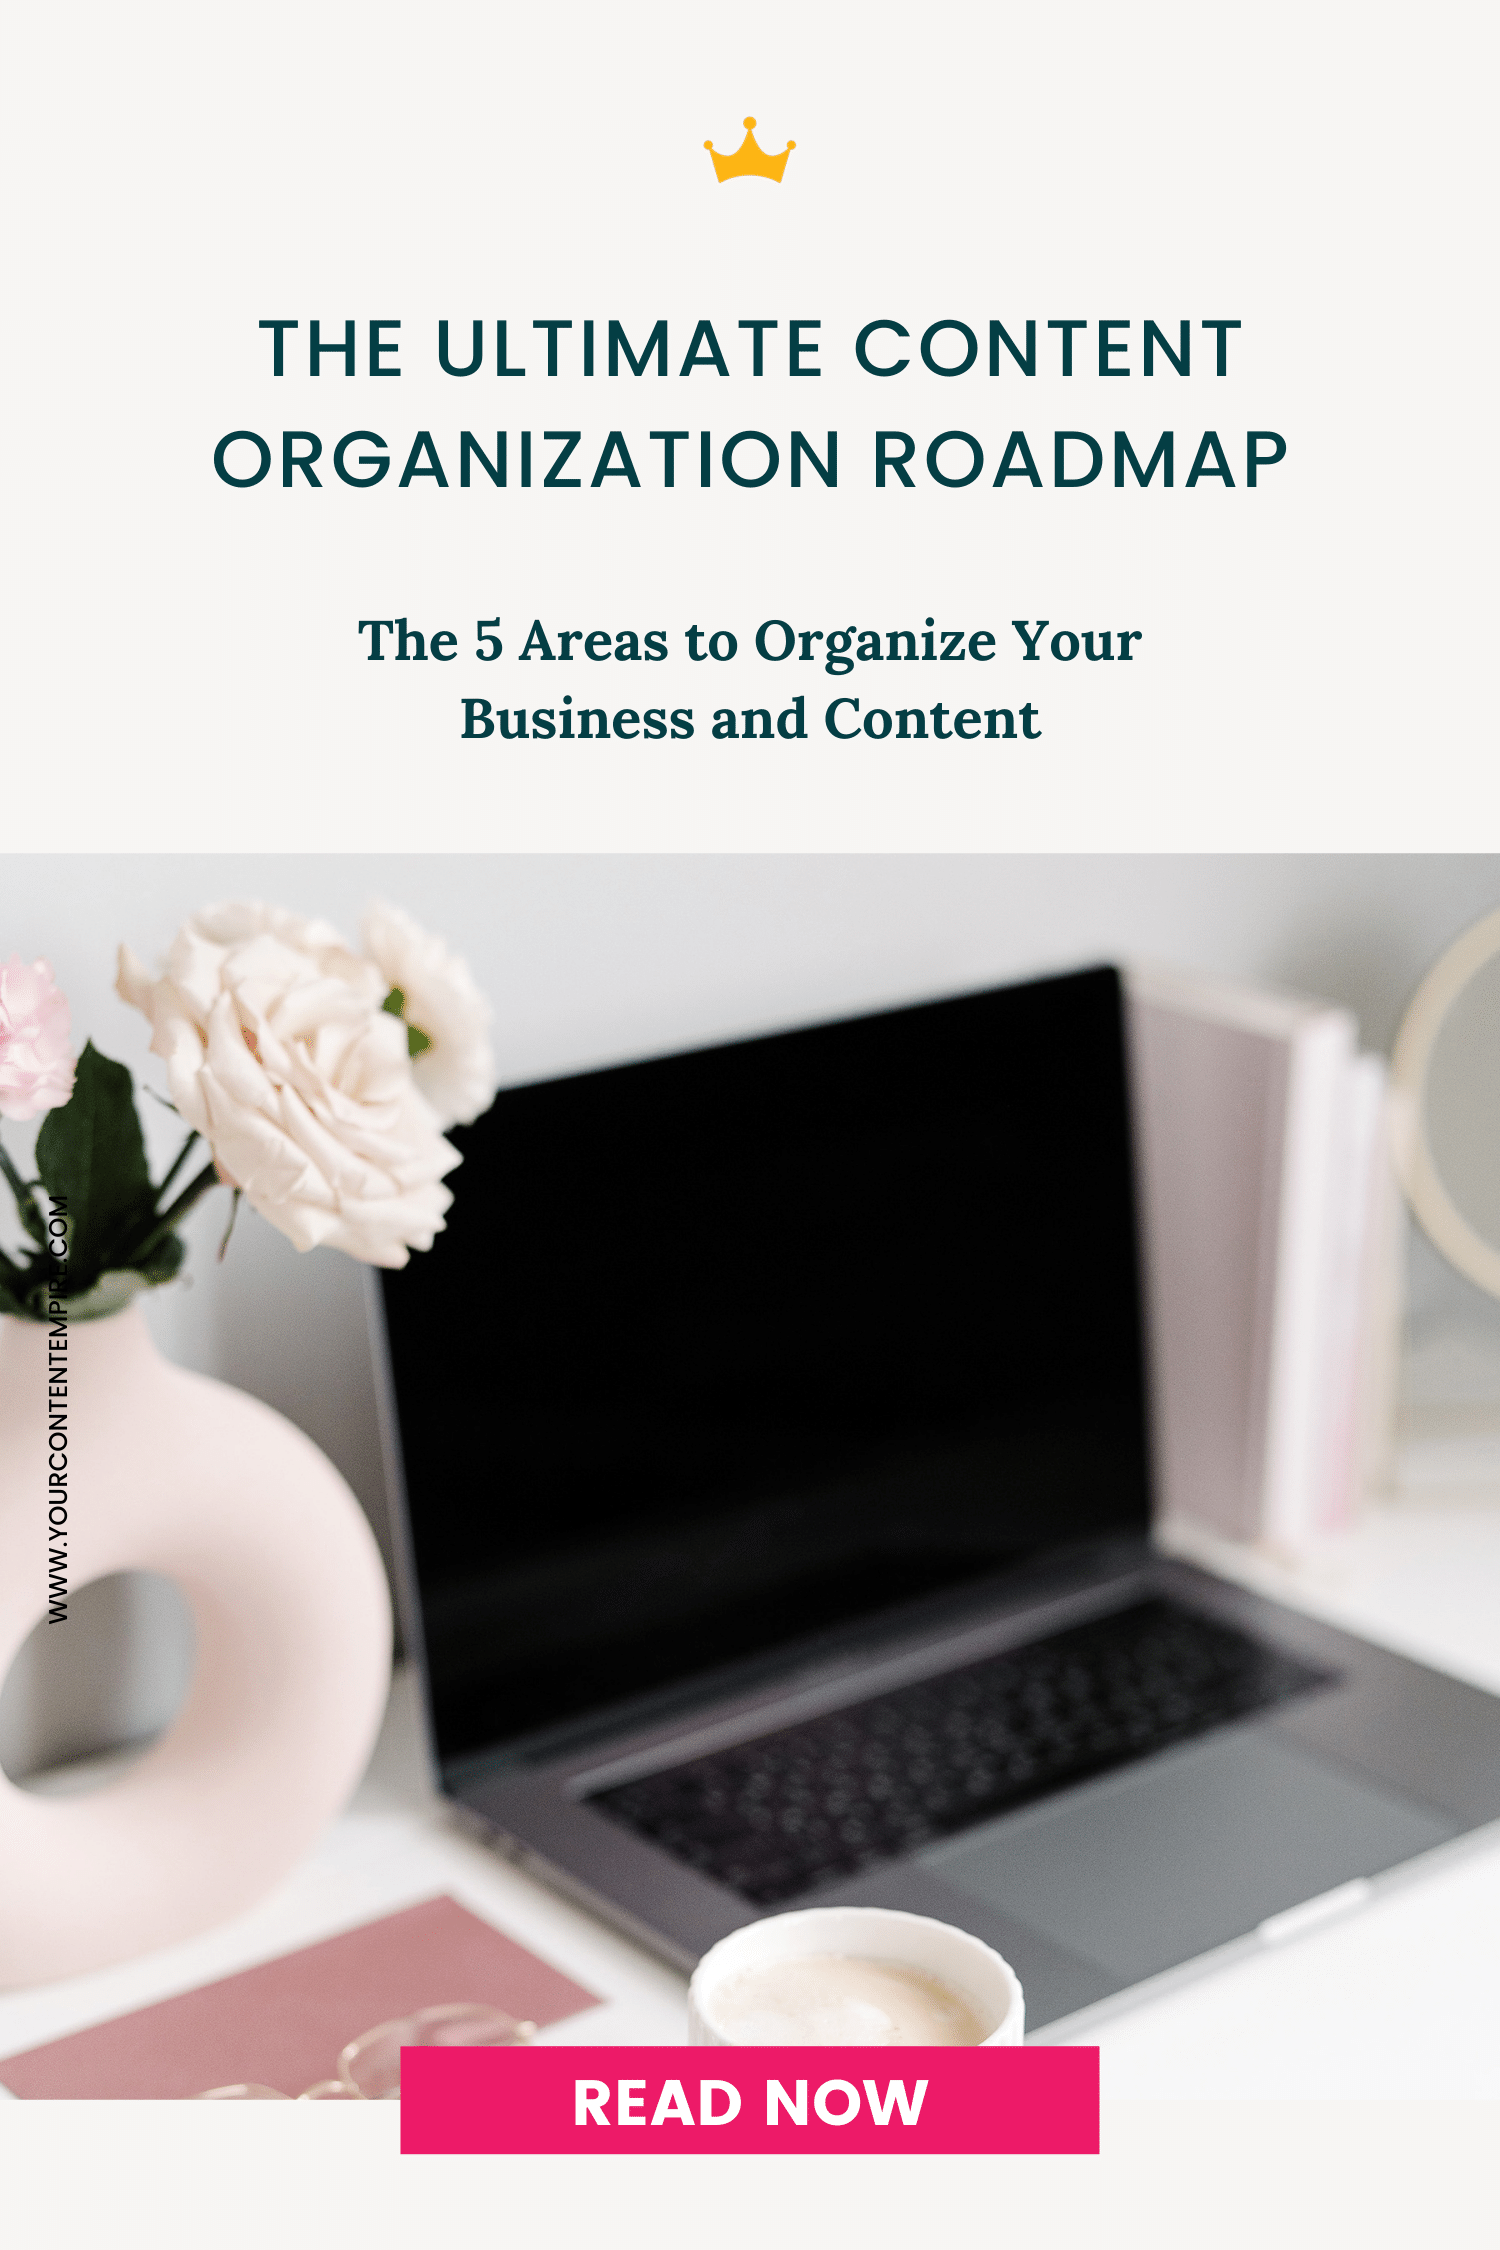 The Ultimate Content Organization Roadmap